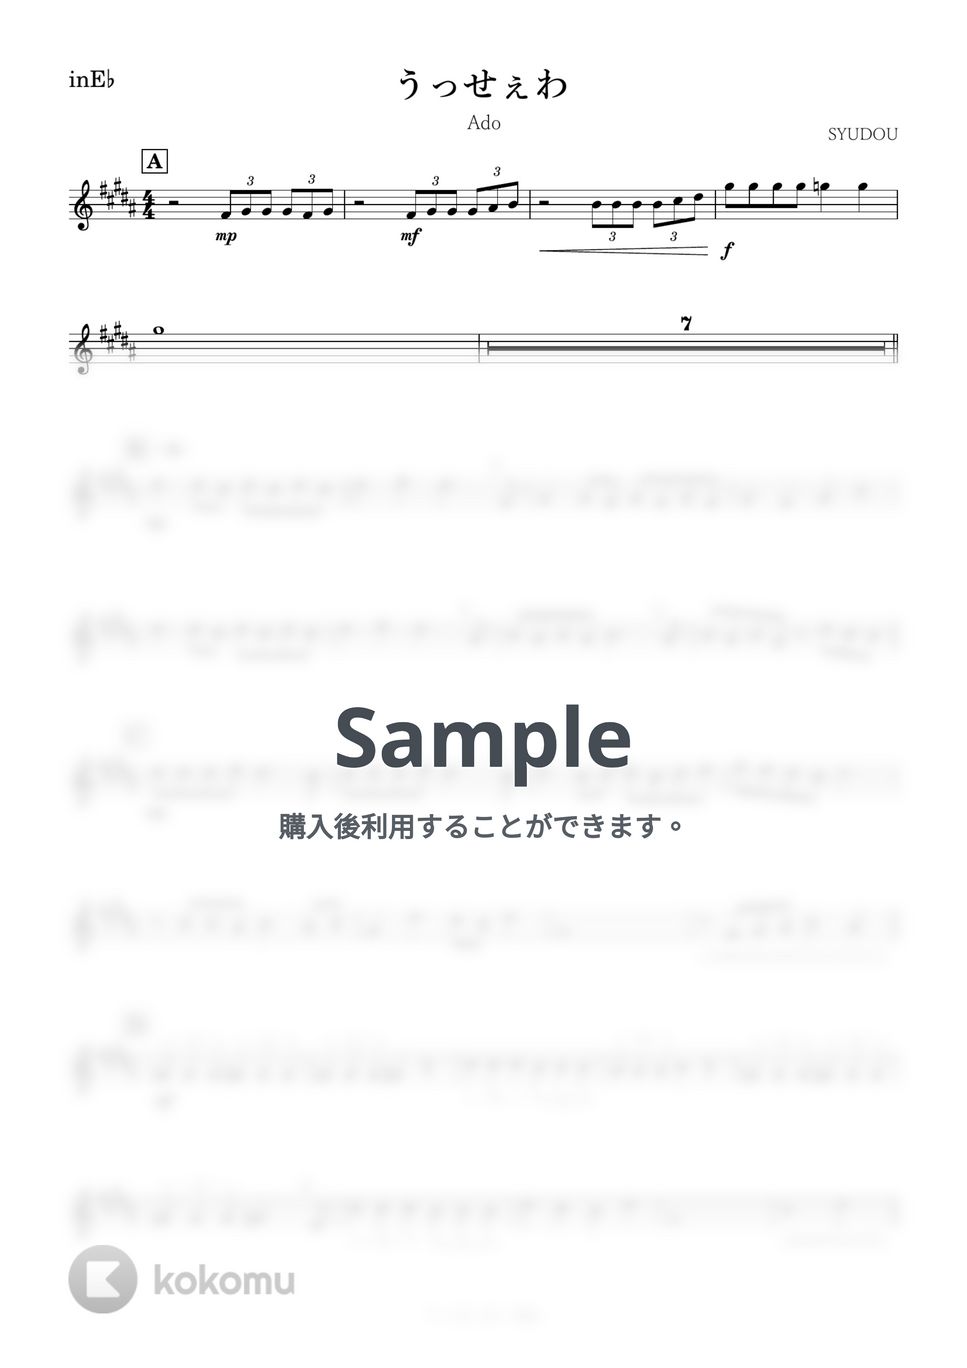 Ado - うっせぇわ (E♭) by kanamusic